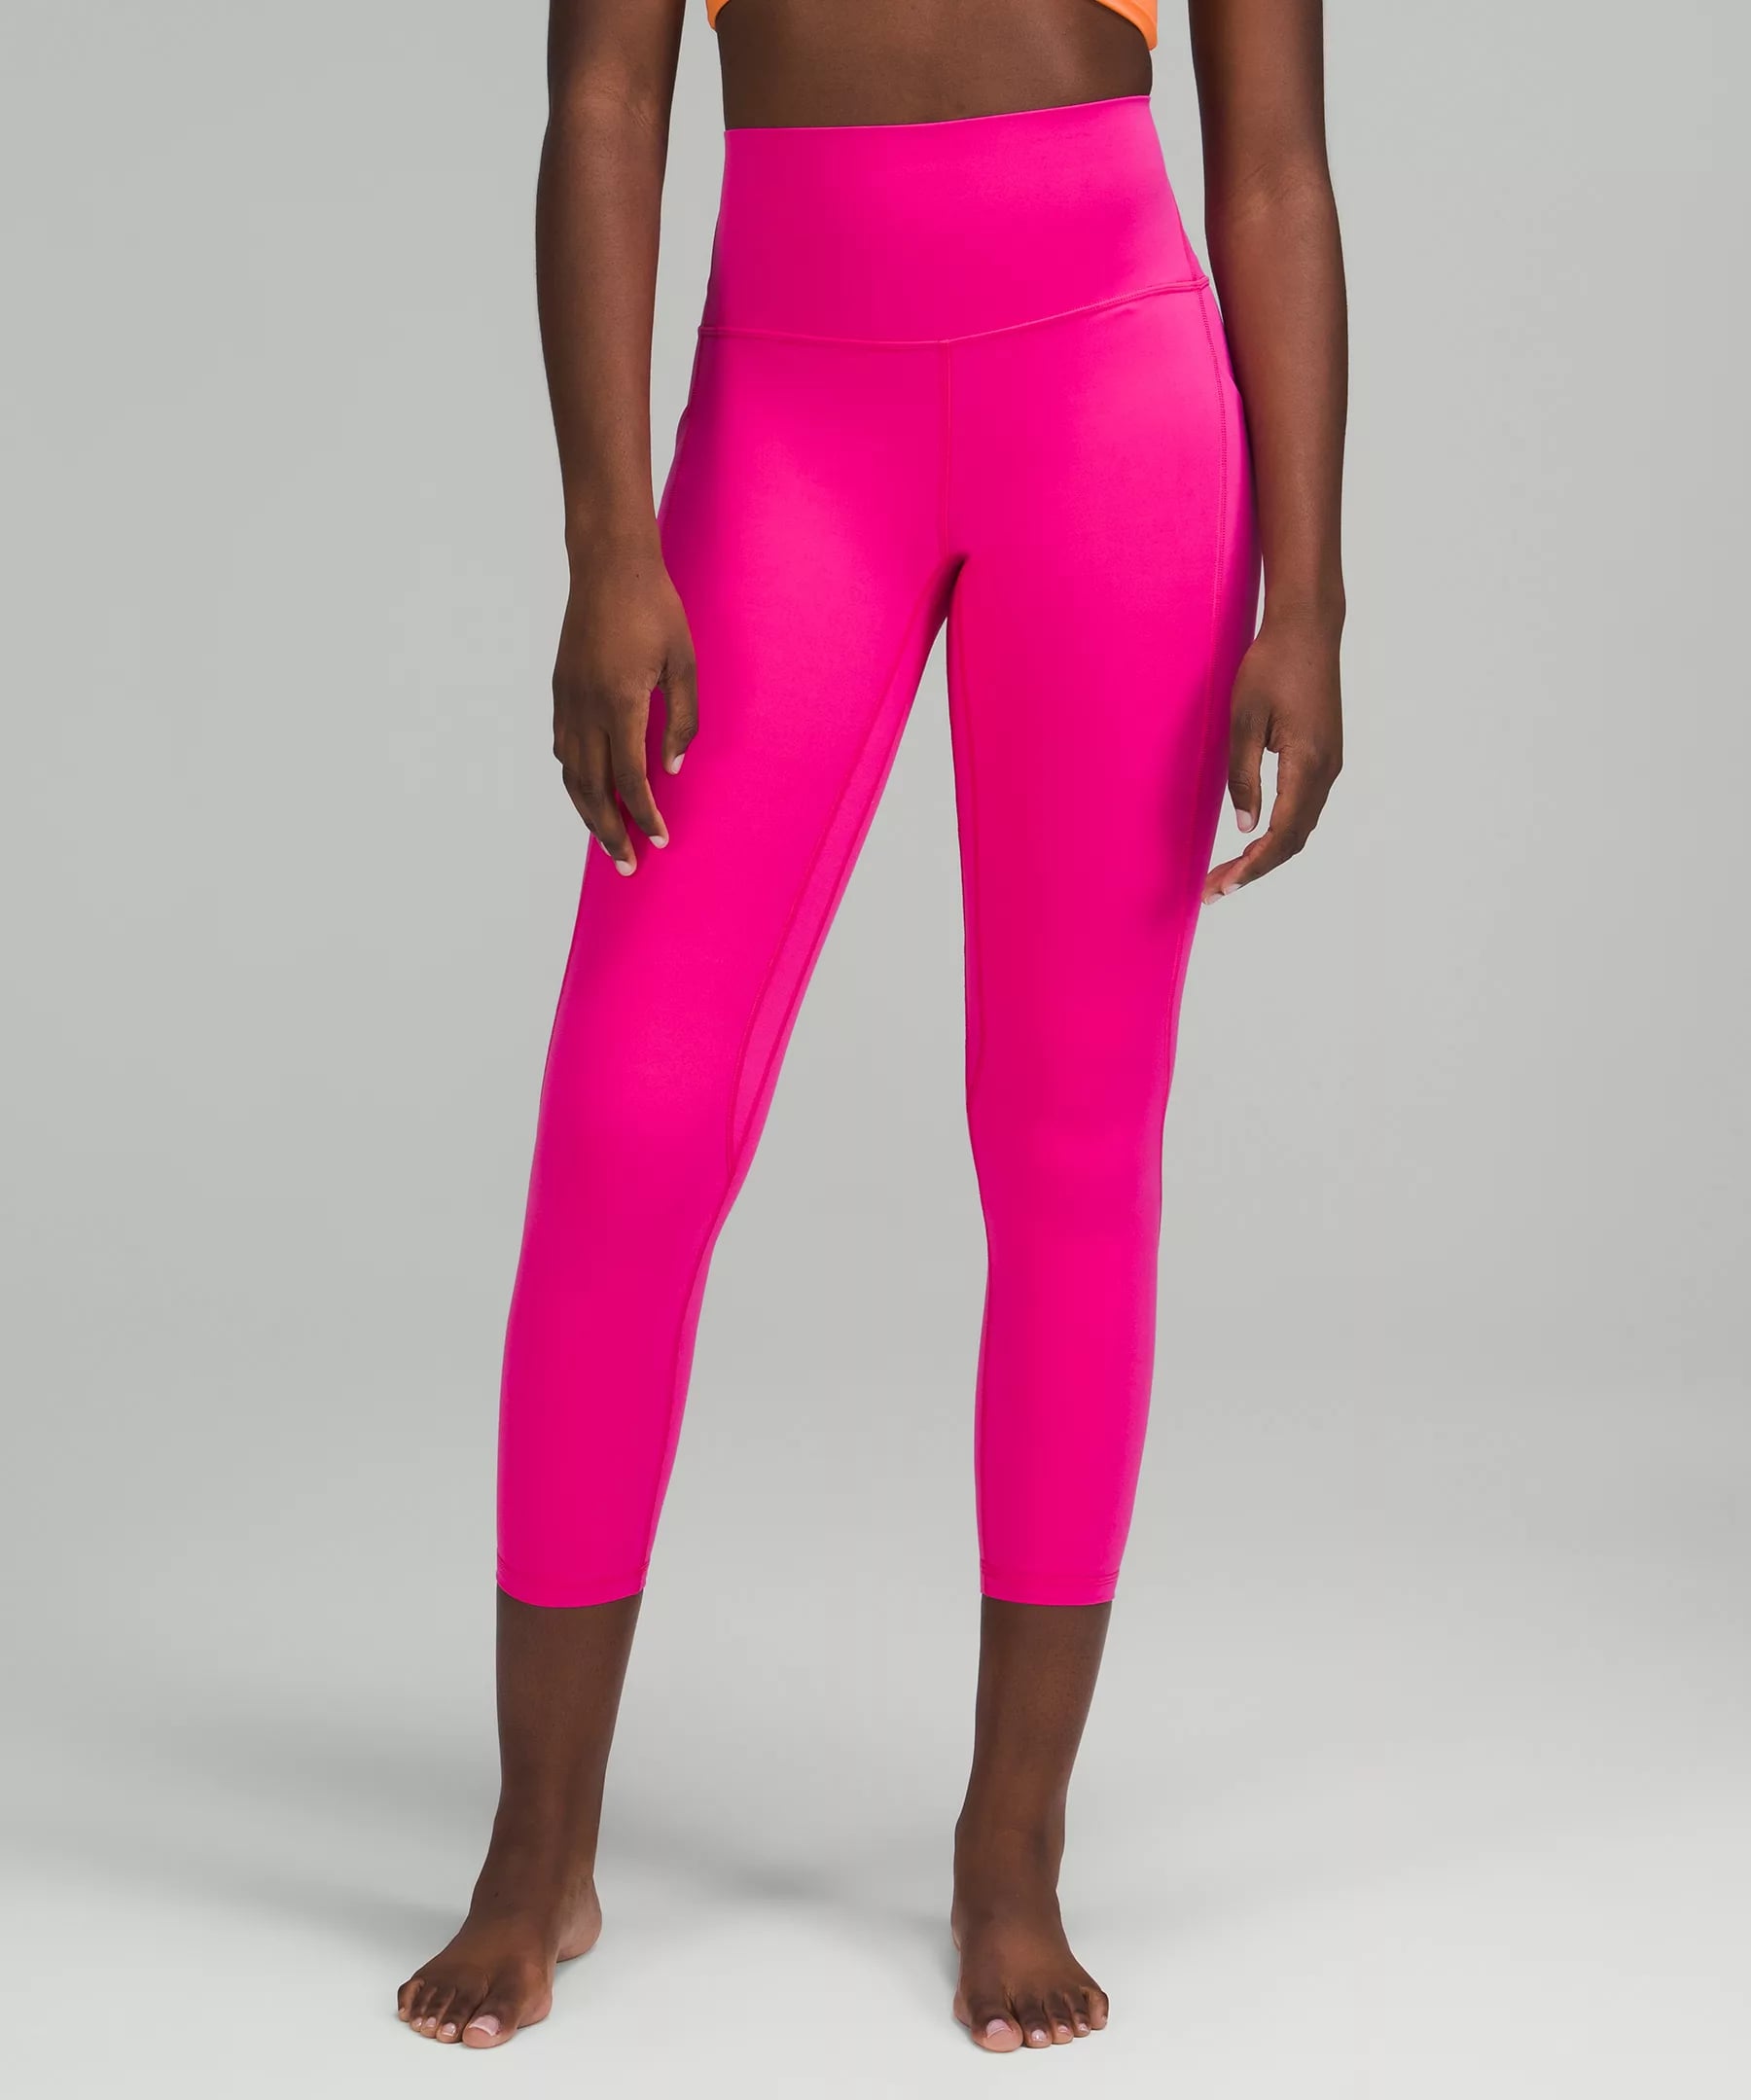 Lululemon's Align leggings now come in shorts: Shop new arrivals